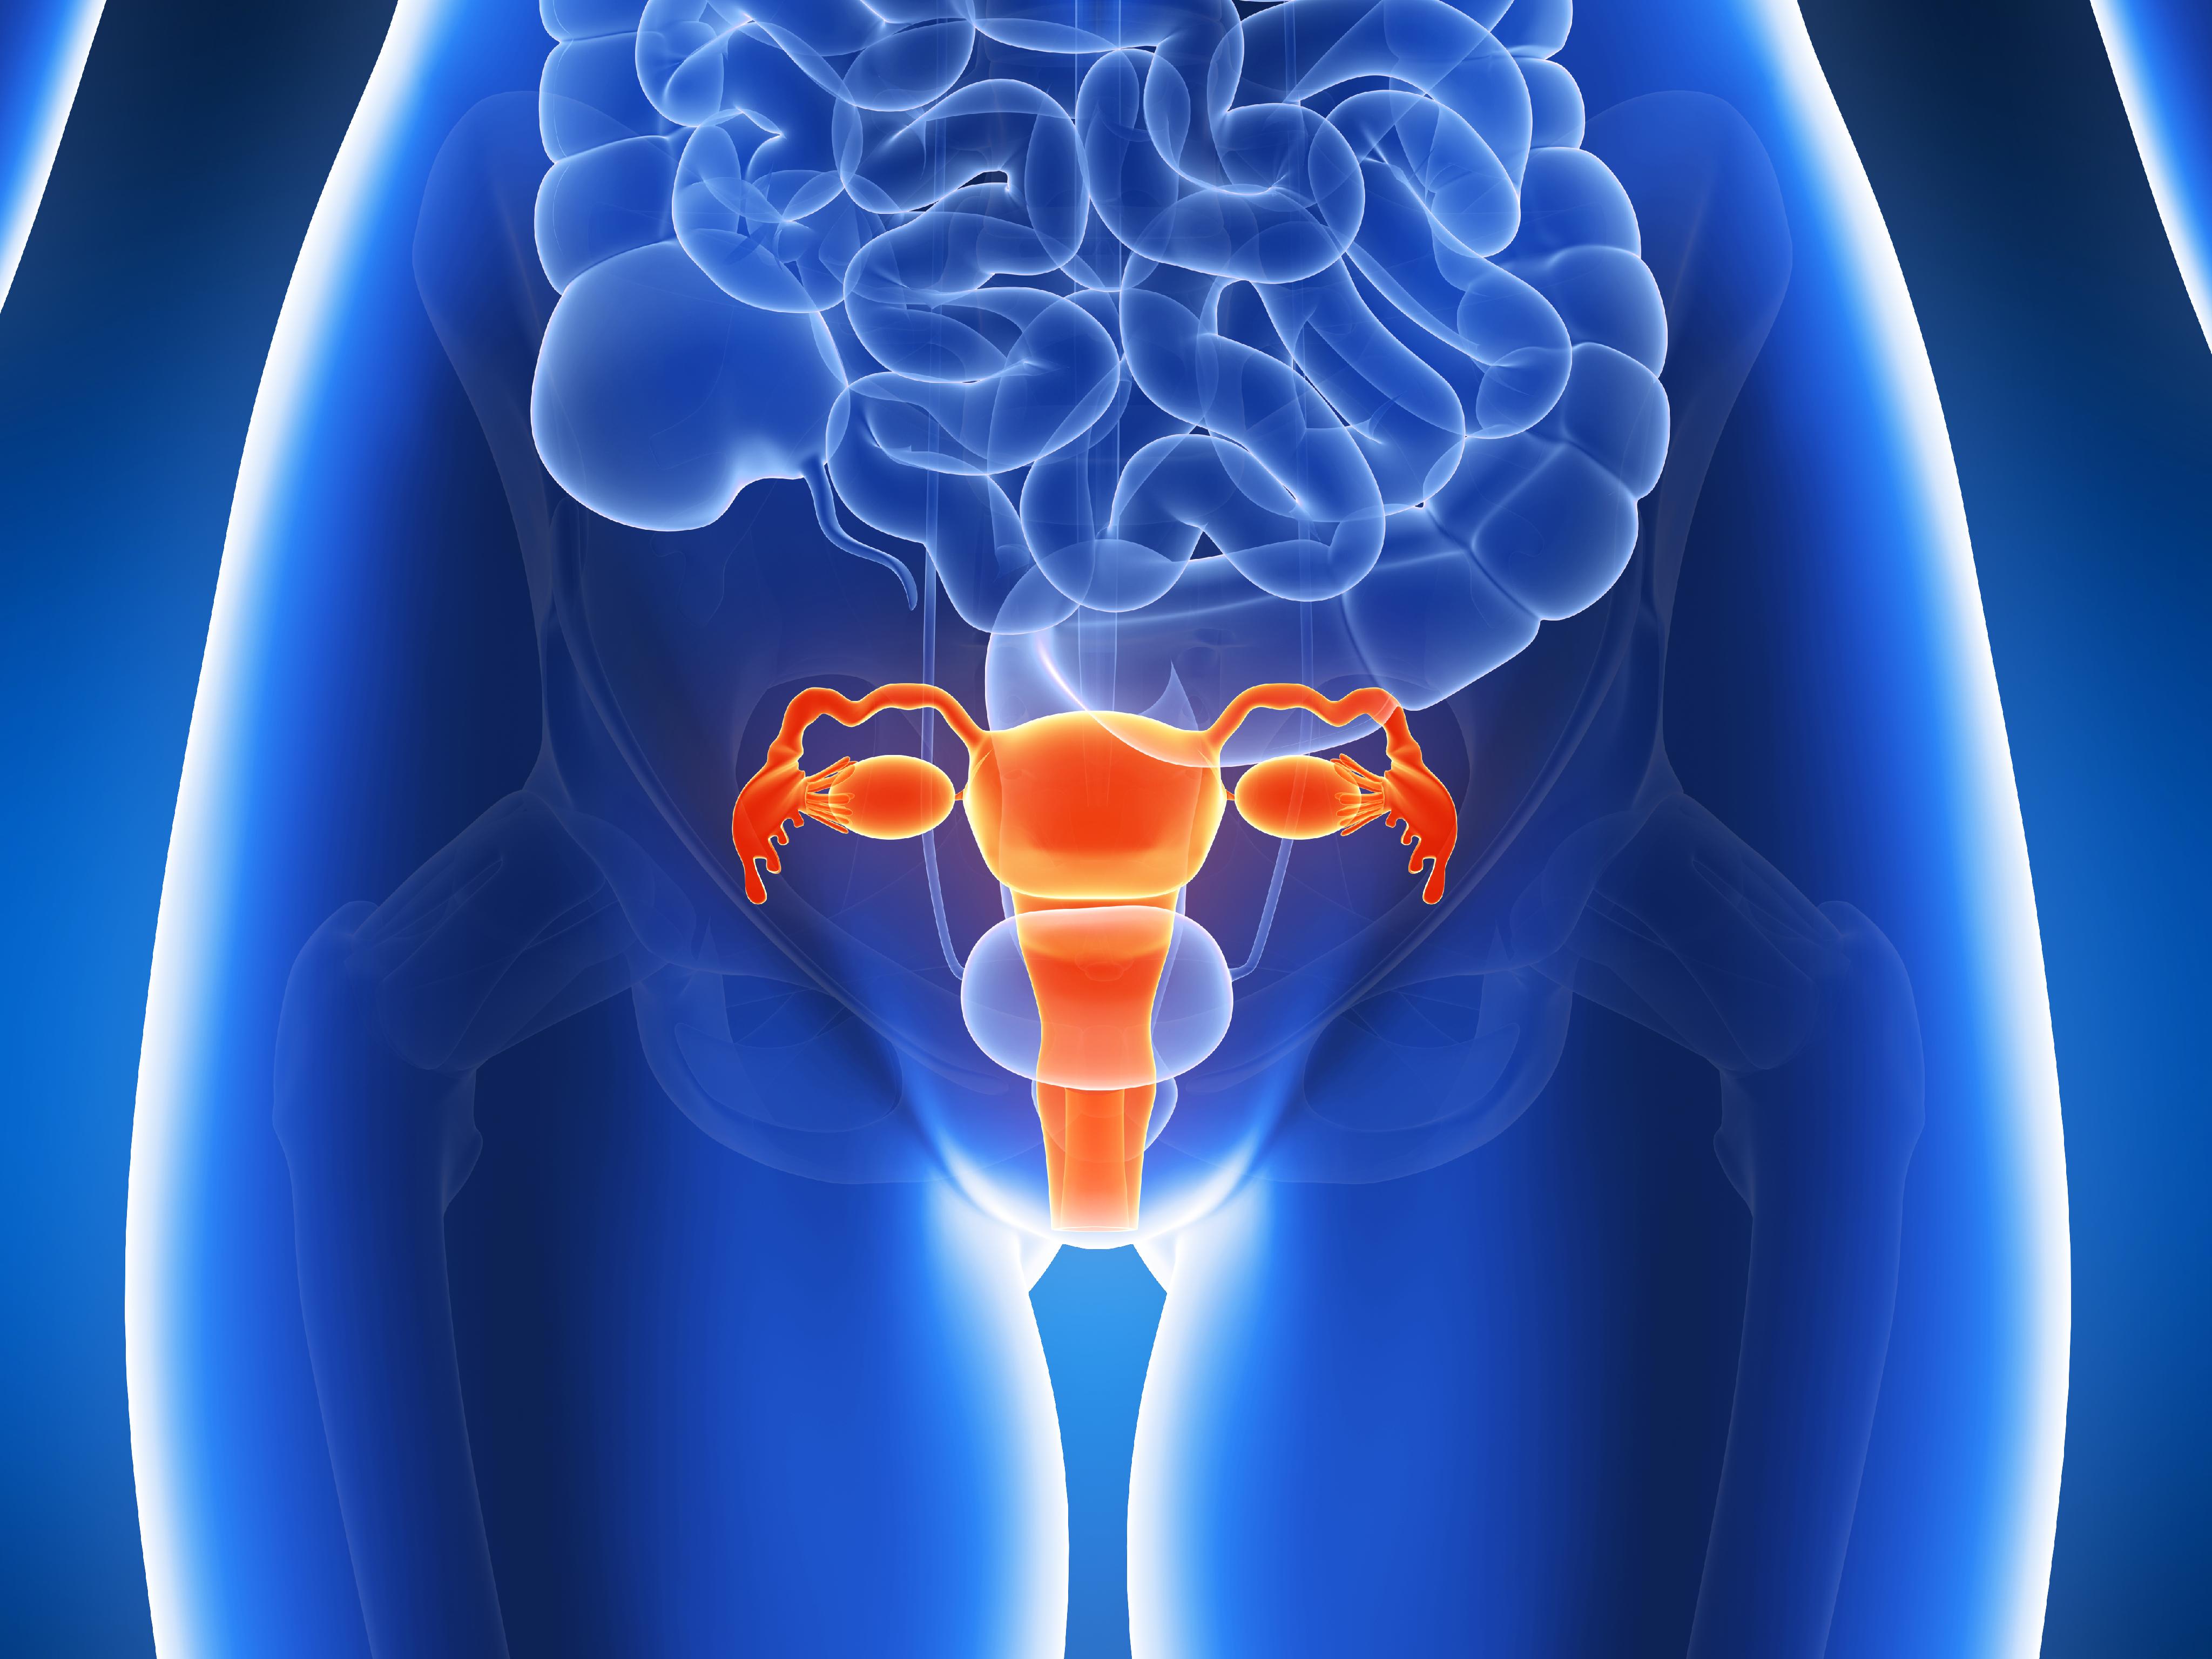 Uterine Cancer | Endometrial Cancer | Hysterectomy | MedlinePlus